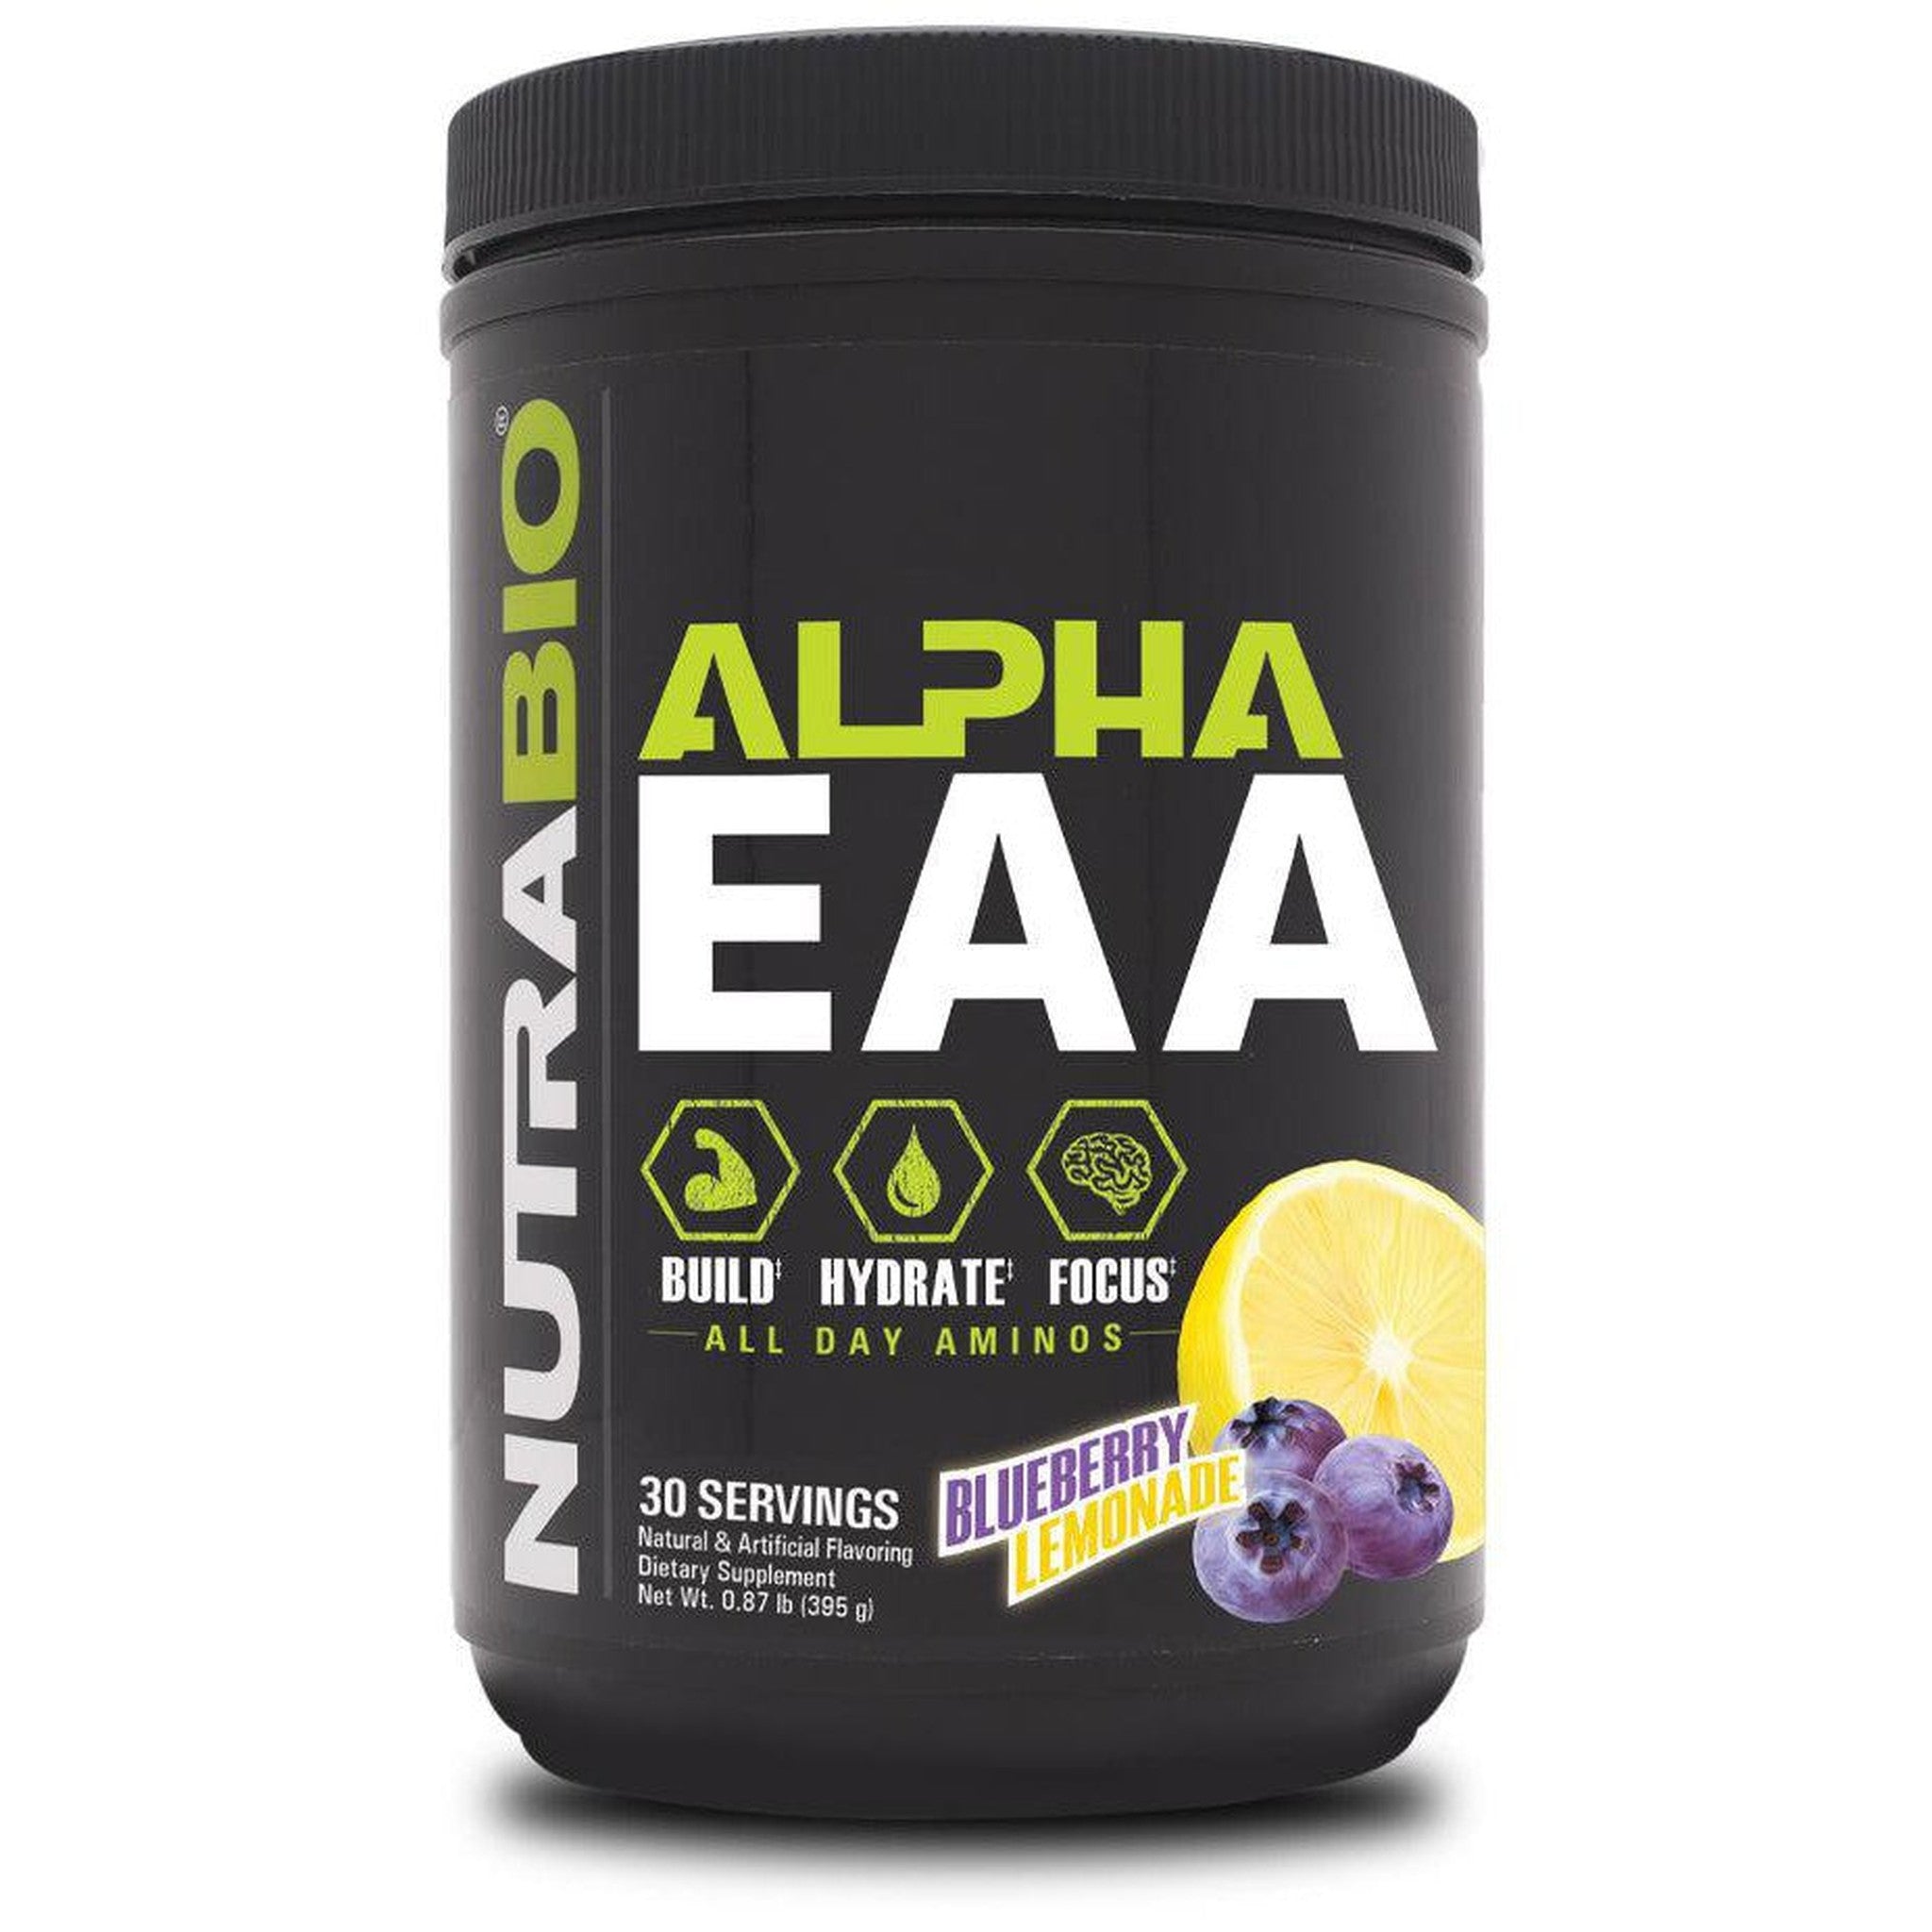 NutraBio Alpha EAA - Ultimate Sport Nutrition